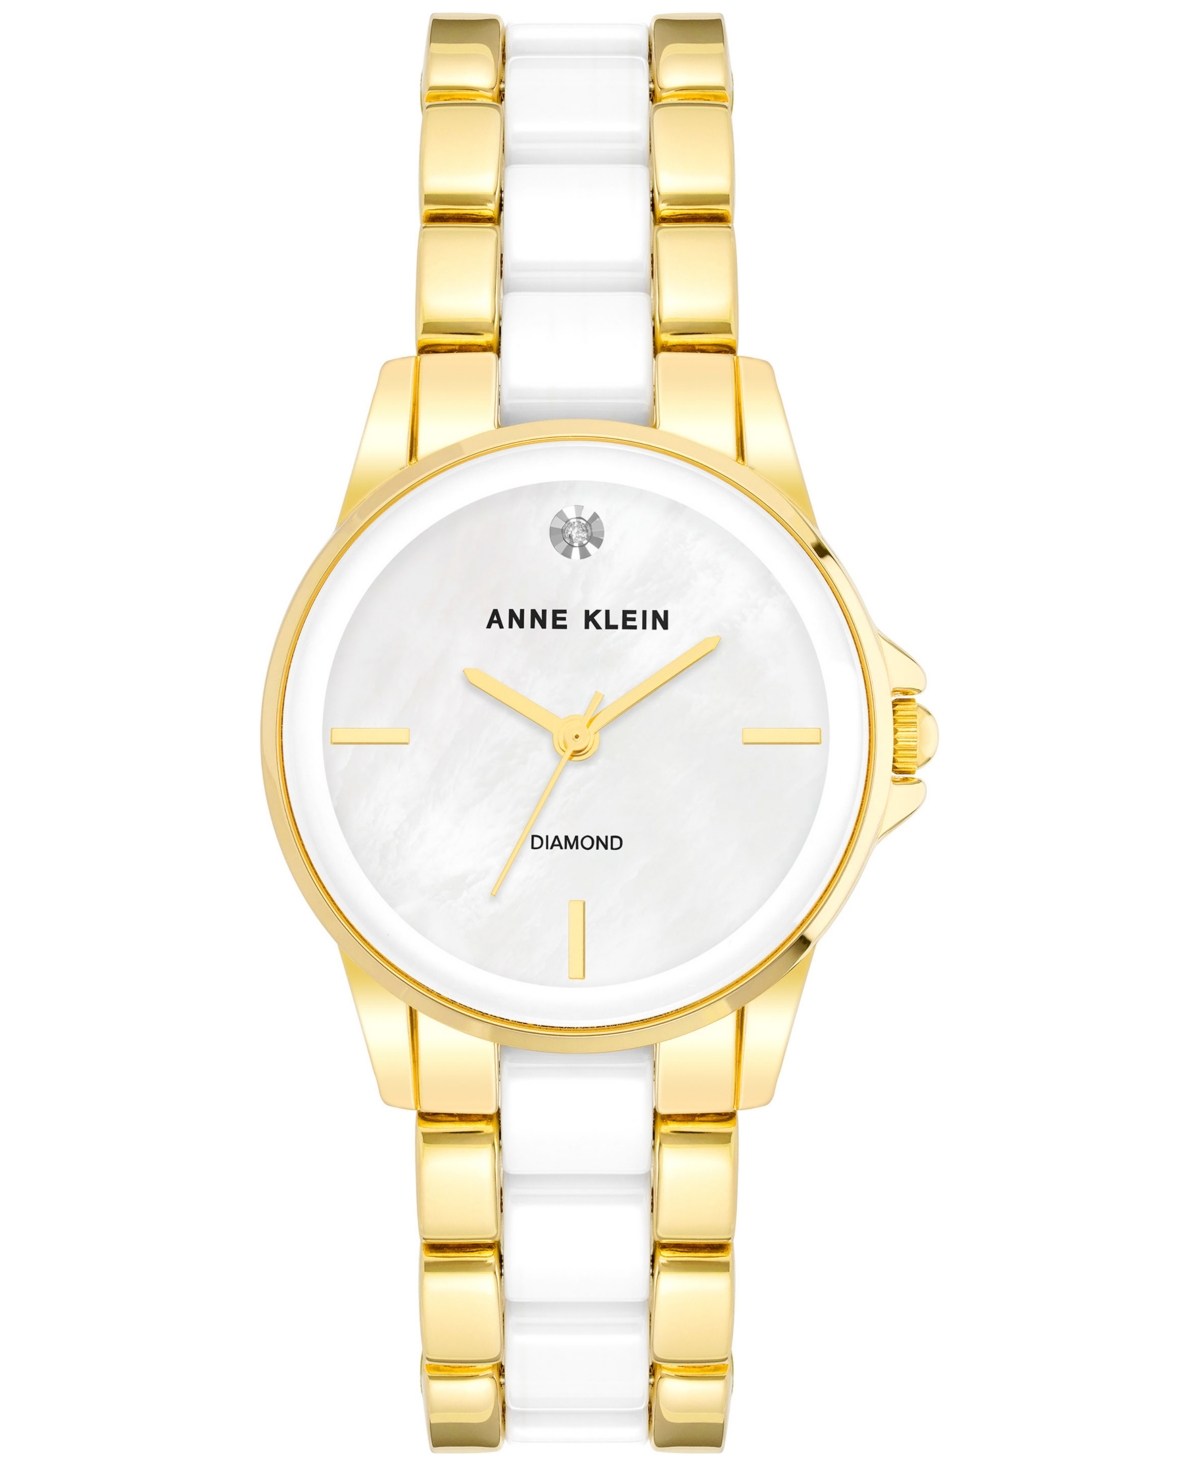  Anne Klein Women's AK/1018BKBK Black Ceramic Bracelet Watch  with Diamond Accent : Clothing, Shoes & Jewelry